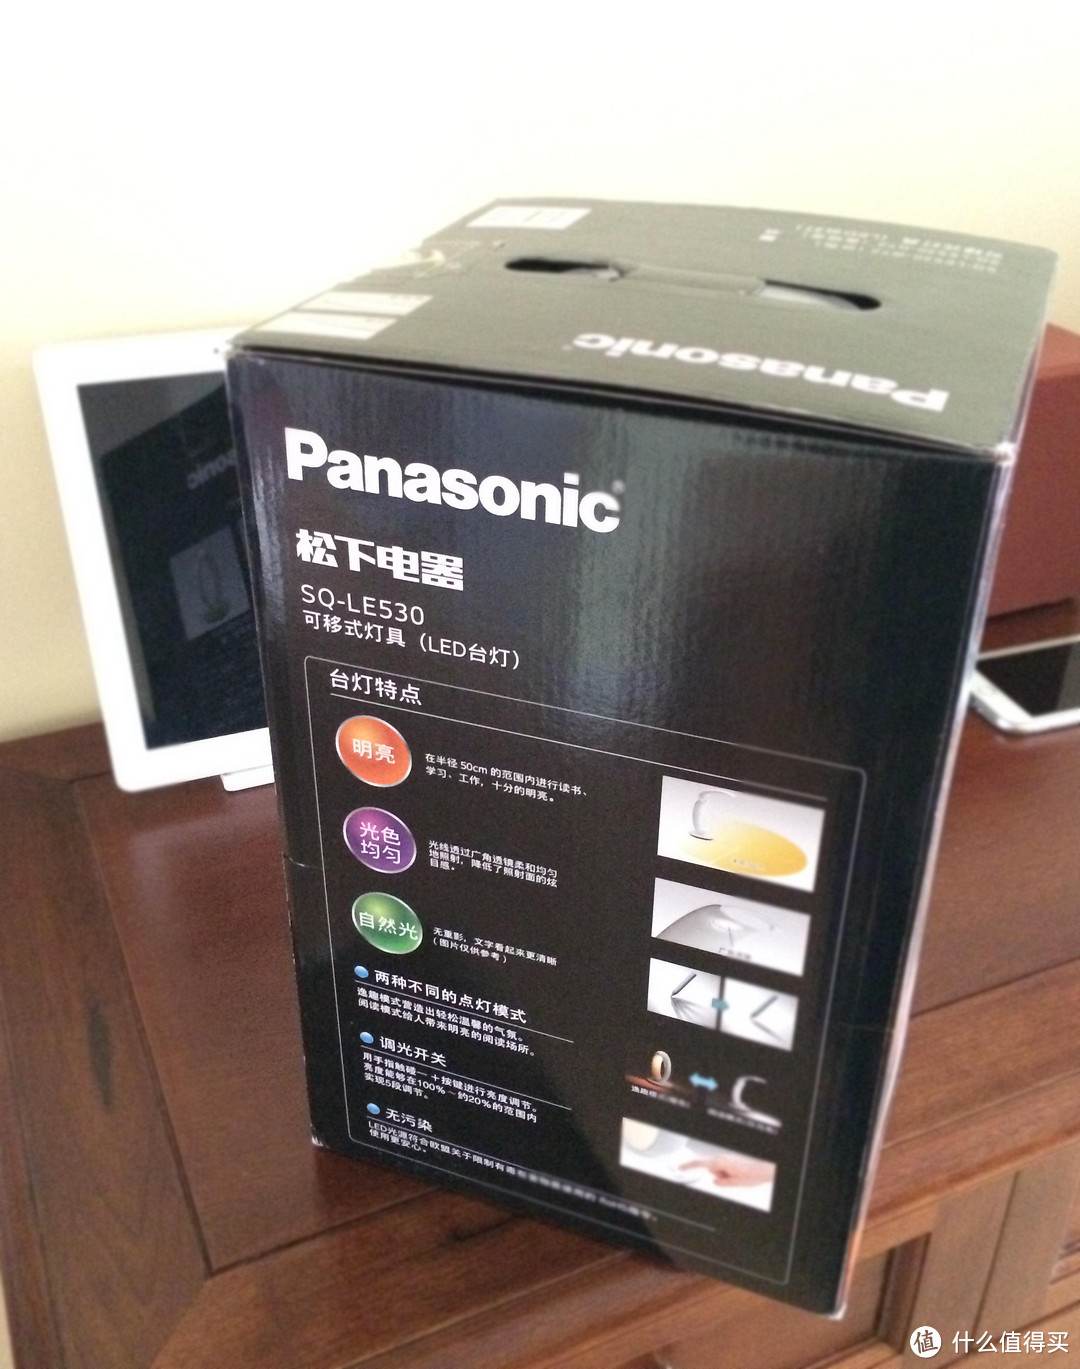 Panasonic 松下 SQ-LE530-N72 触摸式5段调光 LED台灯